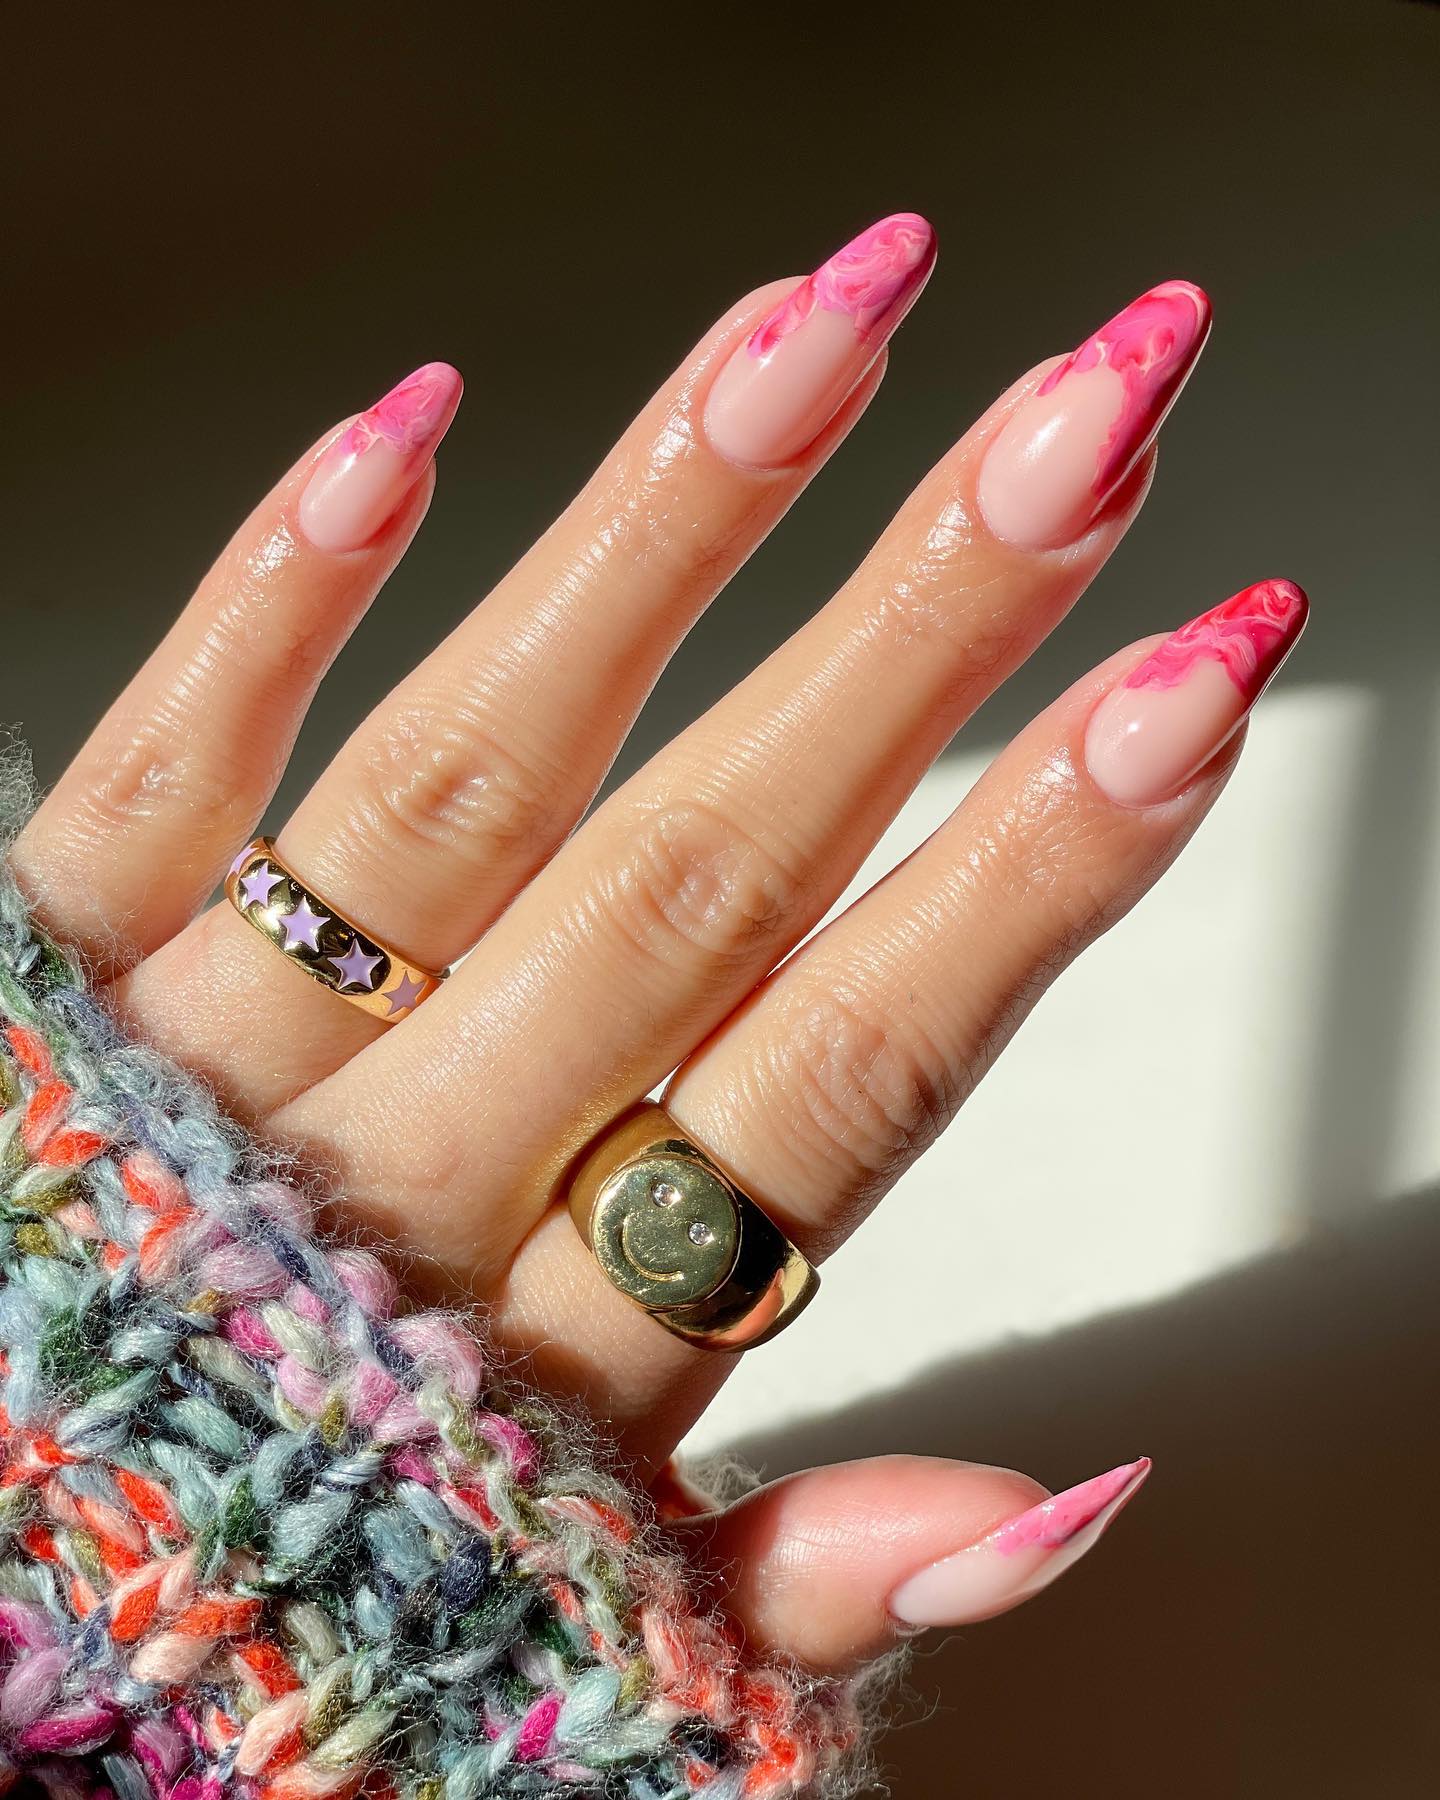 Marble nails: 6 φρέσκα και αιθέρια σχέδια νυχιών που θυμίζουν μάρμαρο